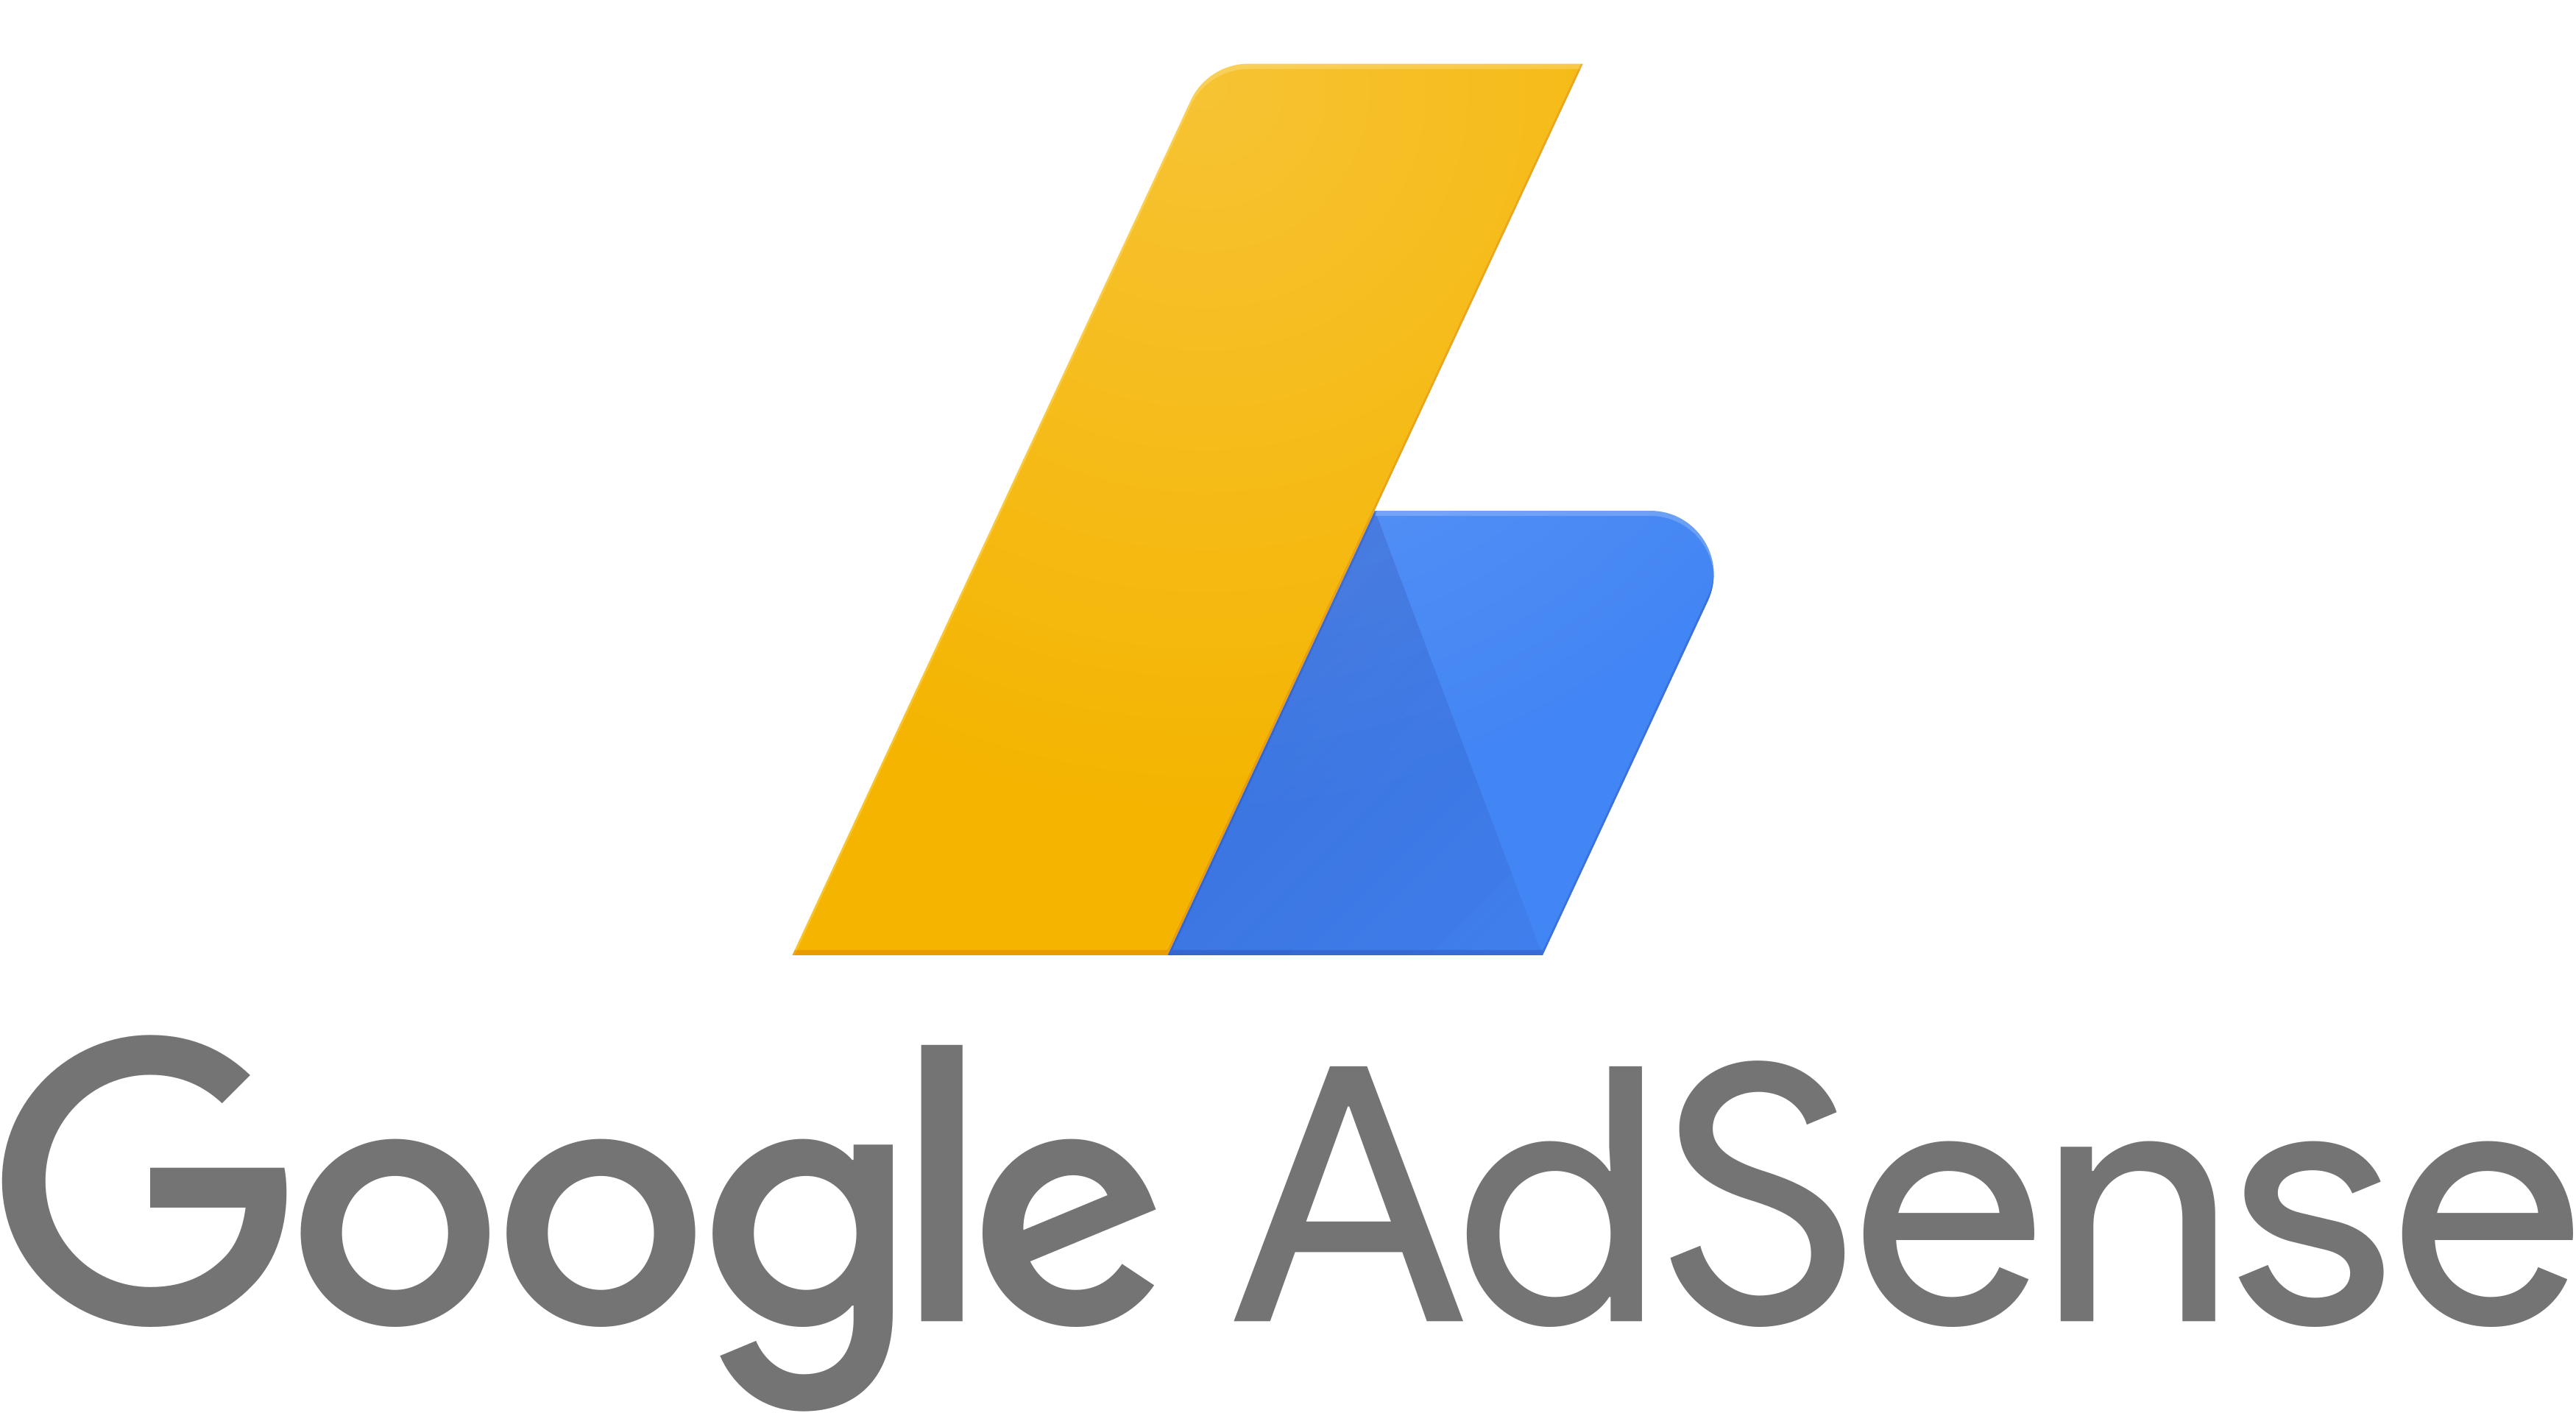 Google Adsense Logo - Google Adsense Account Approval: How To Make The Adsense Team Like